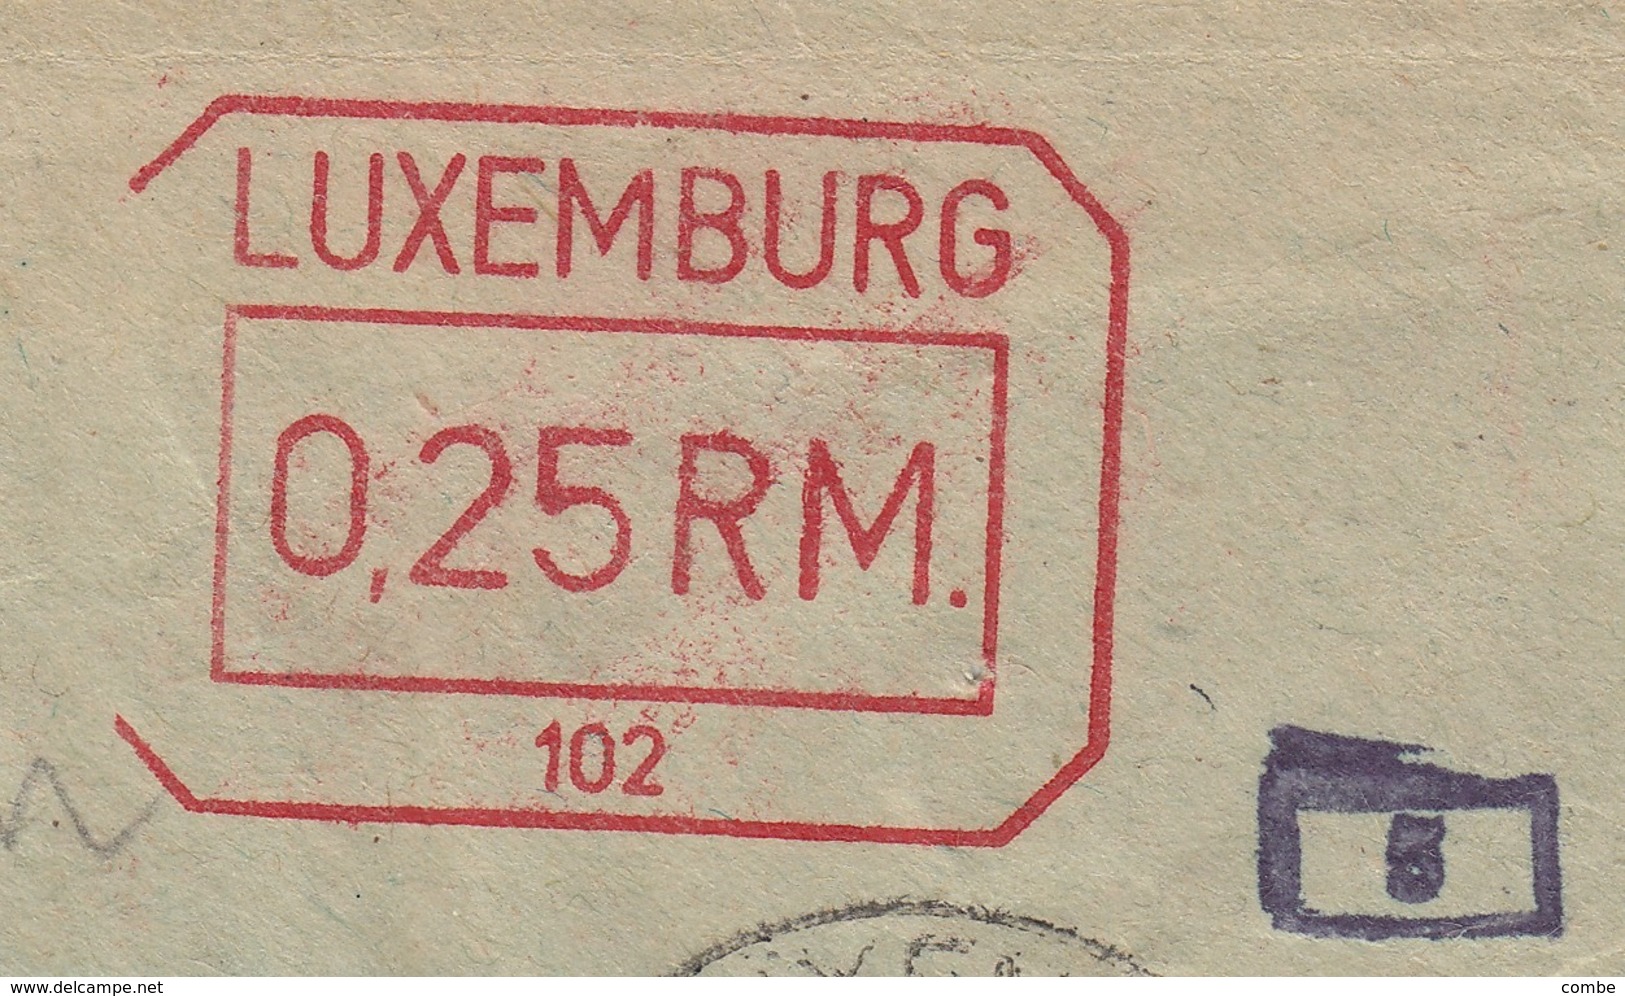 LUXEMBOURG. 1941. INTERNATIONALE BANK IN LUXEMBURG. CENSURE ALLEMANDE ET NOMBREUX COURRIERS. / 6000 - 1940-1944 German Occupation